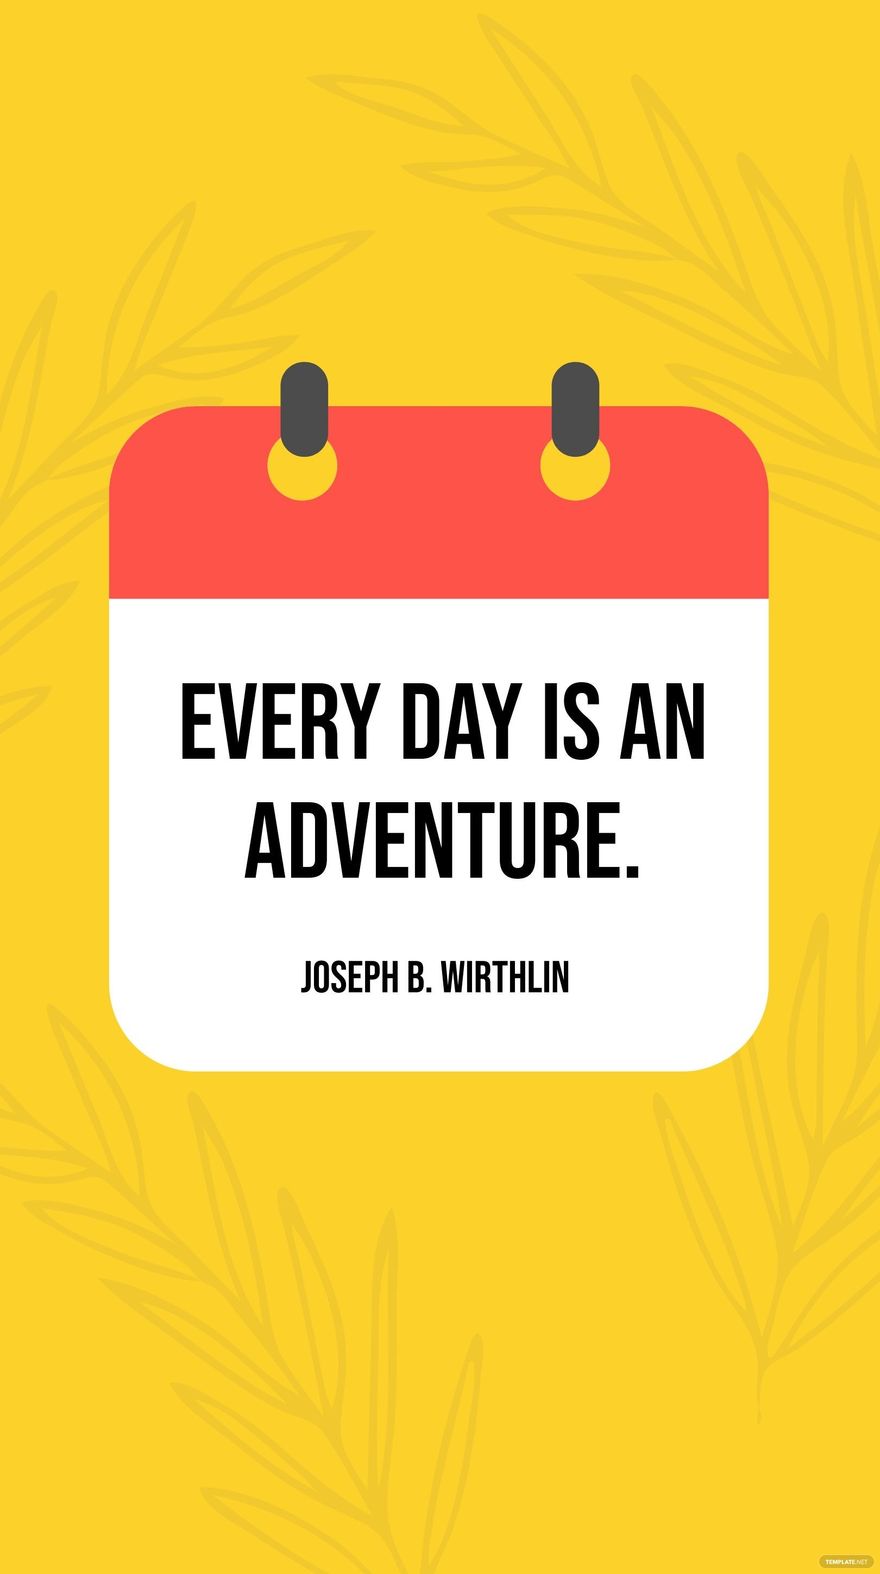 Free Joseph B. Wirthlin - Every day is an adventure. in JPG